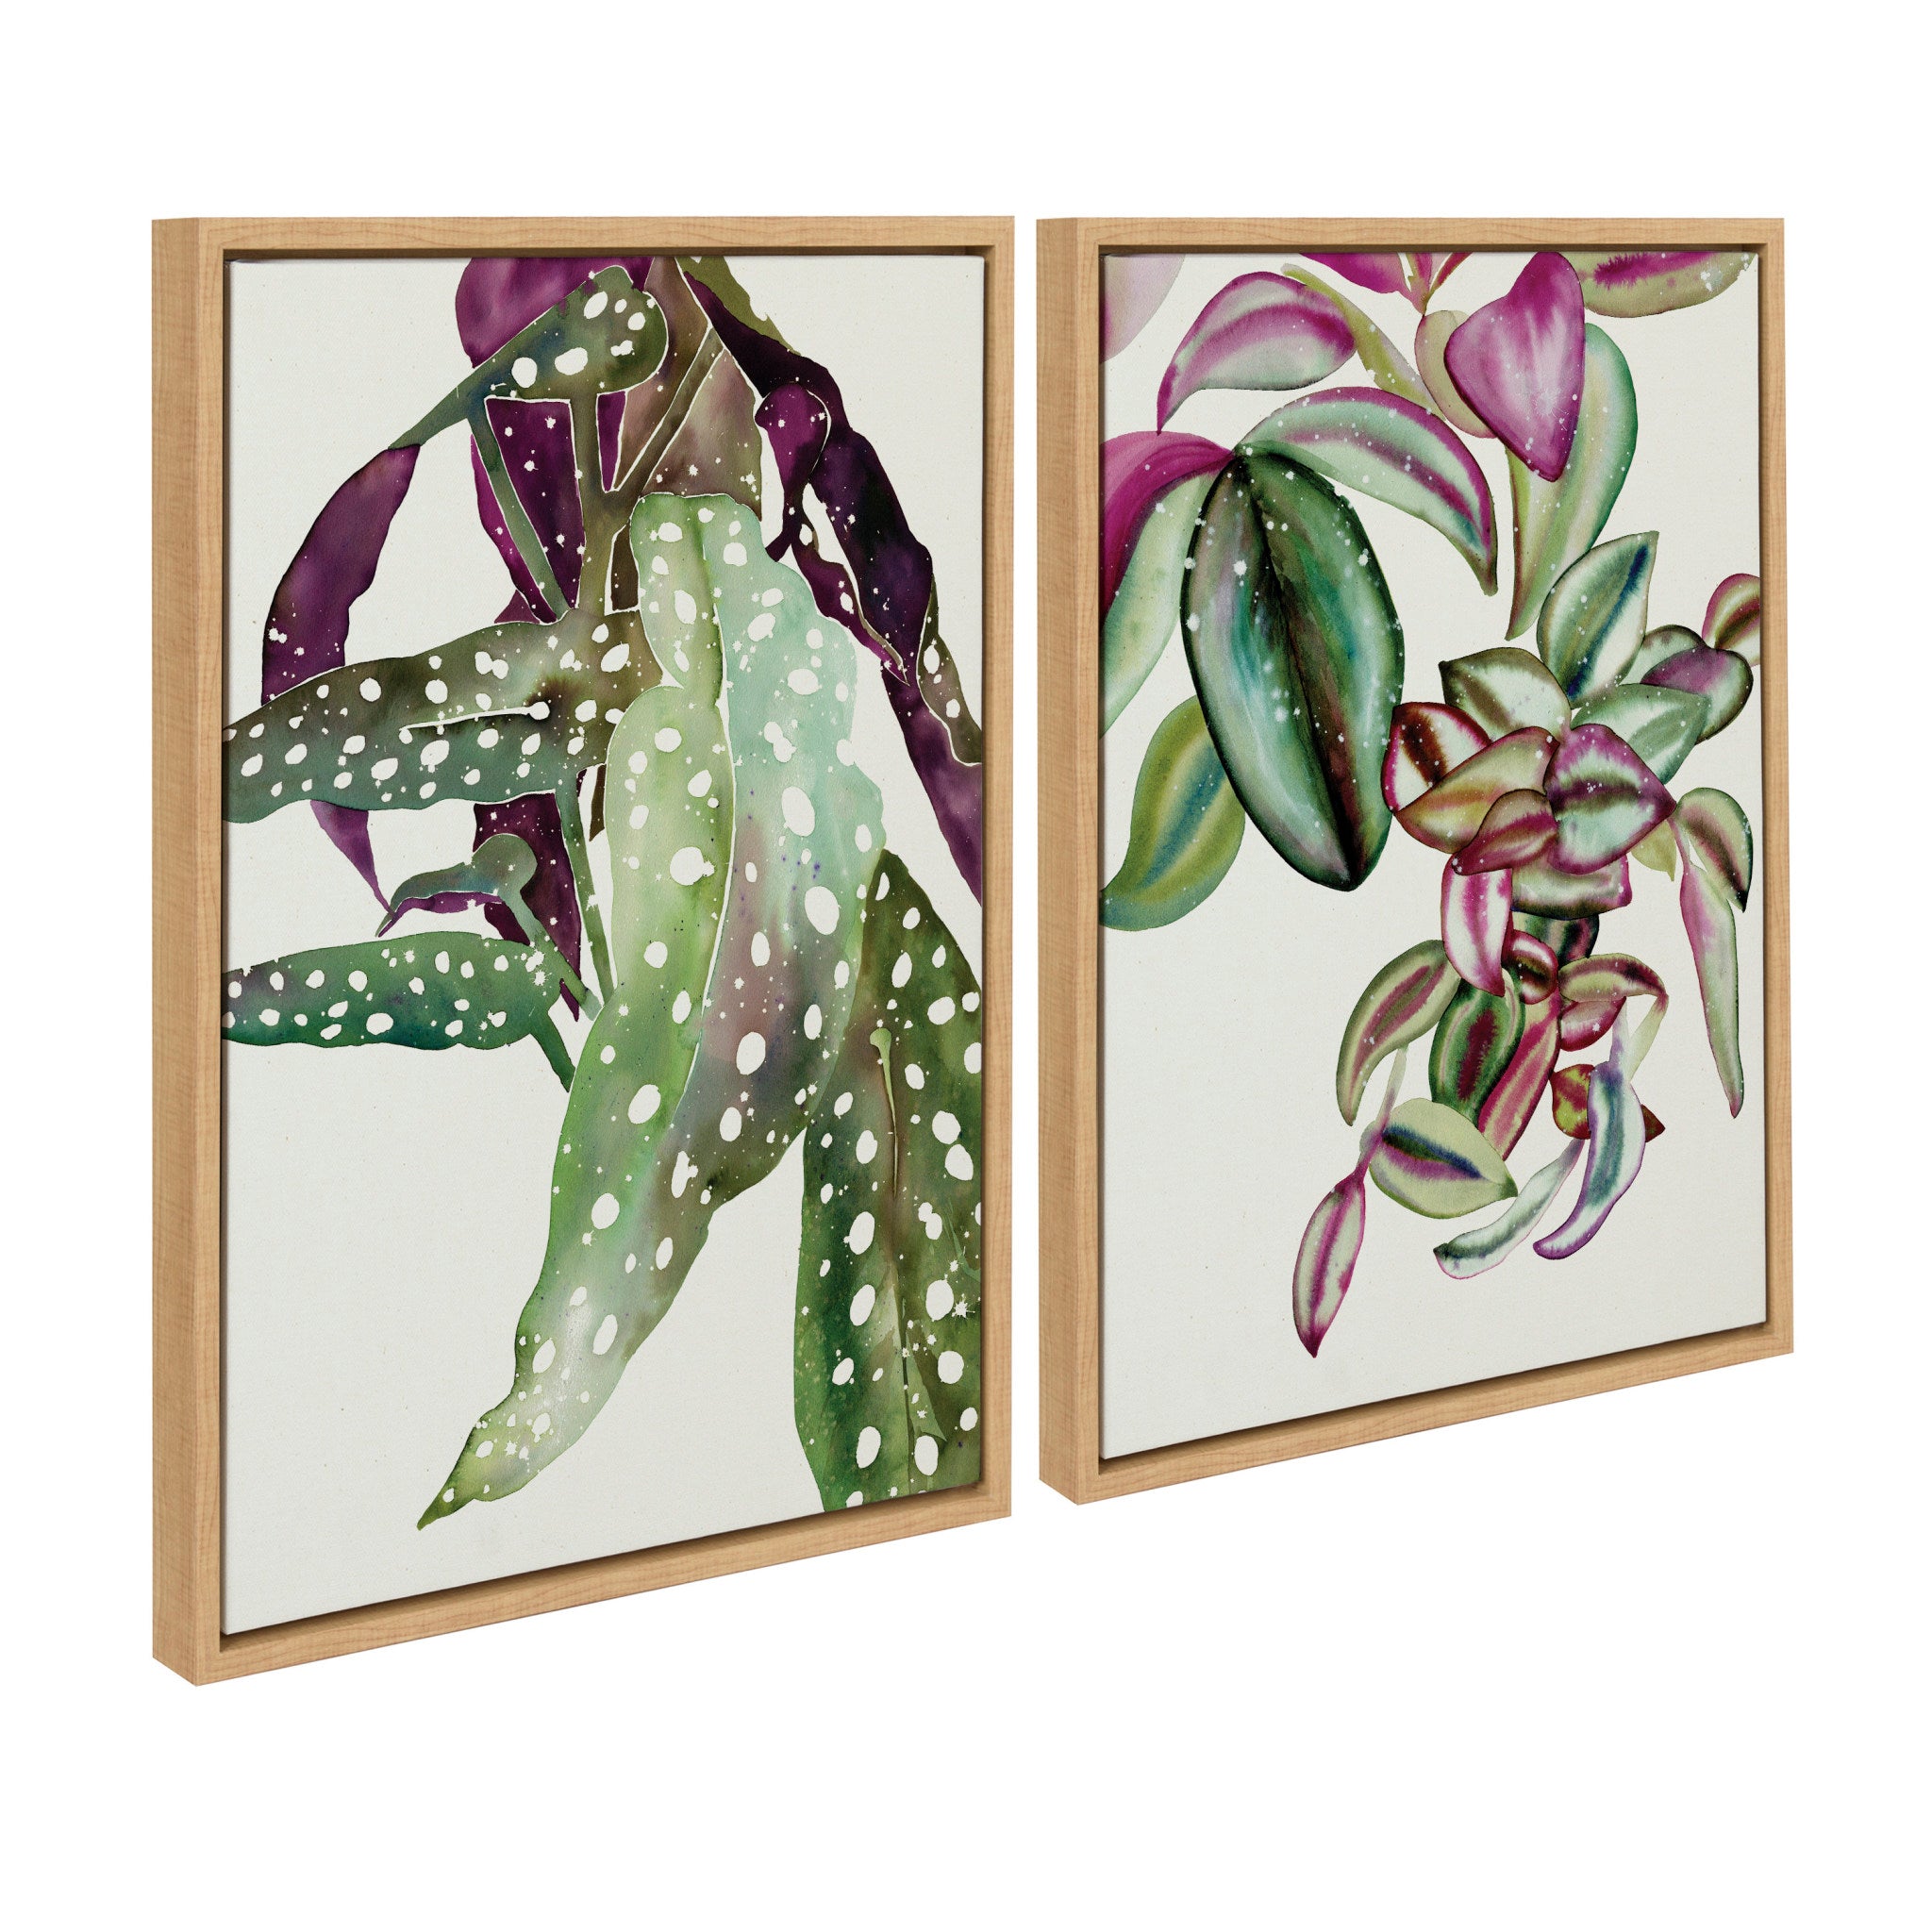 Sylvie Polka Dot Begonia and Tradescantia Framed Canvas by Ingrid Sanchez of CreativeIngrid